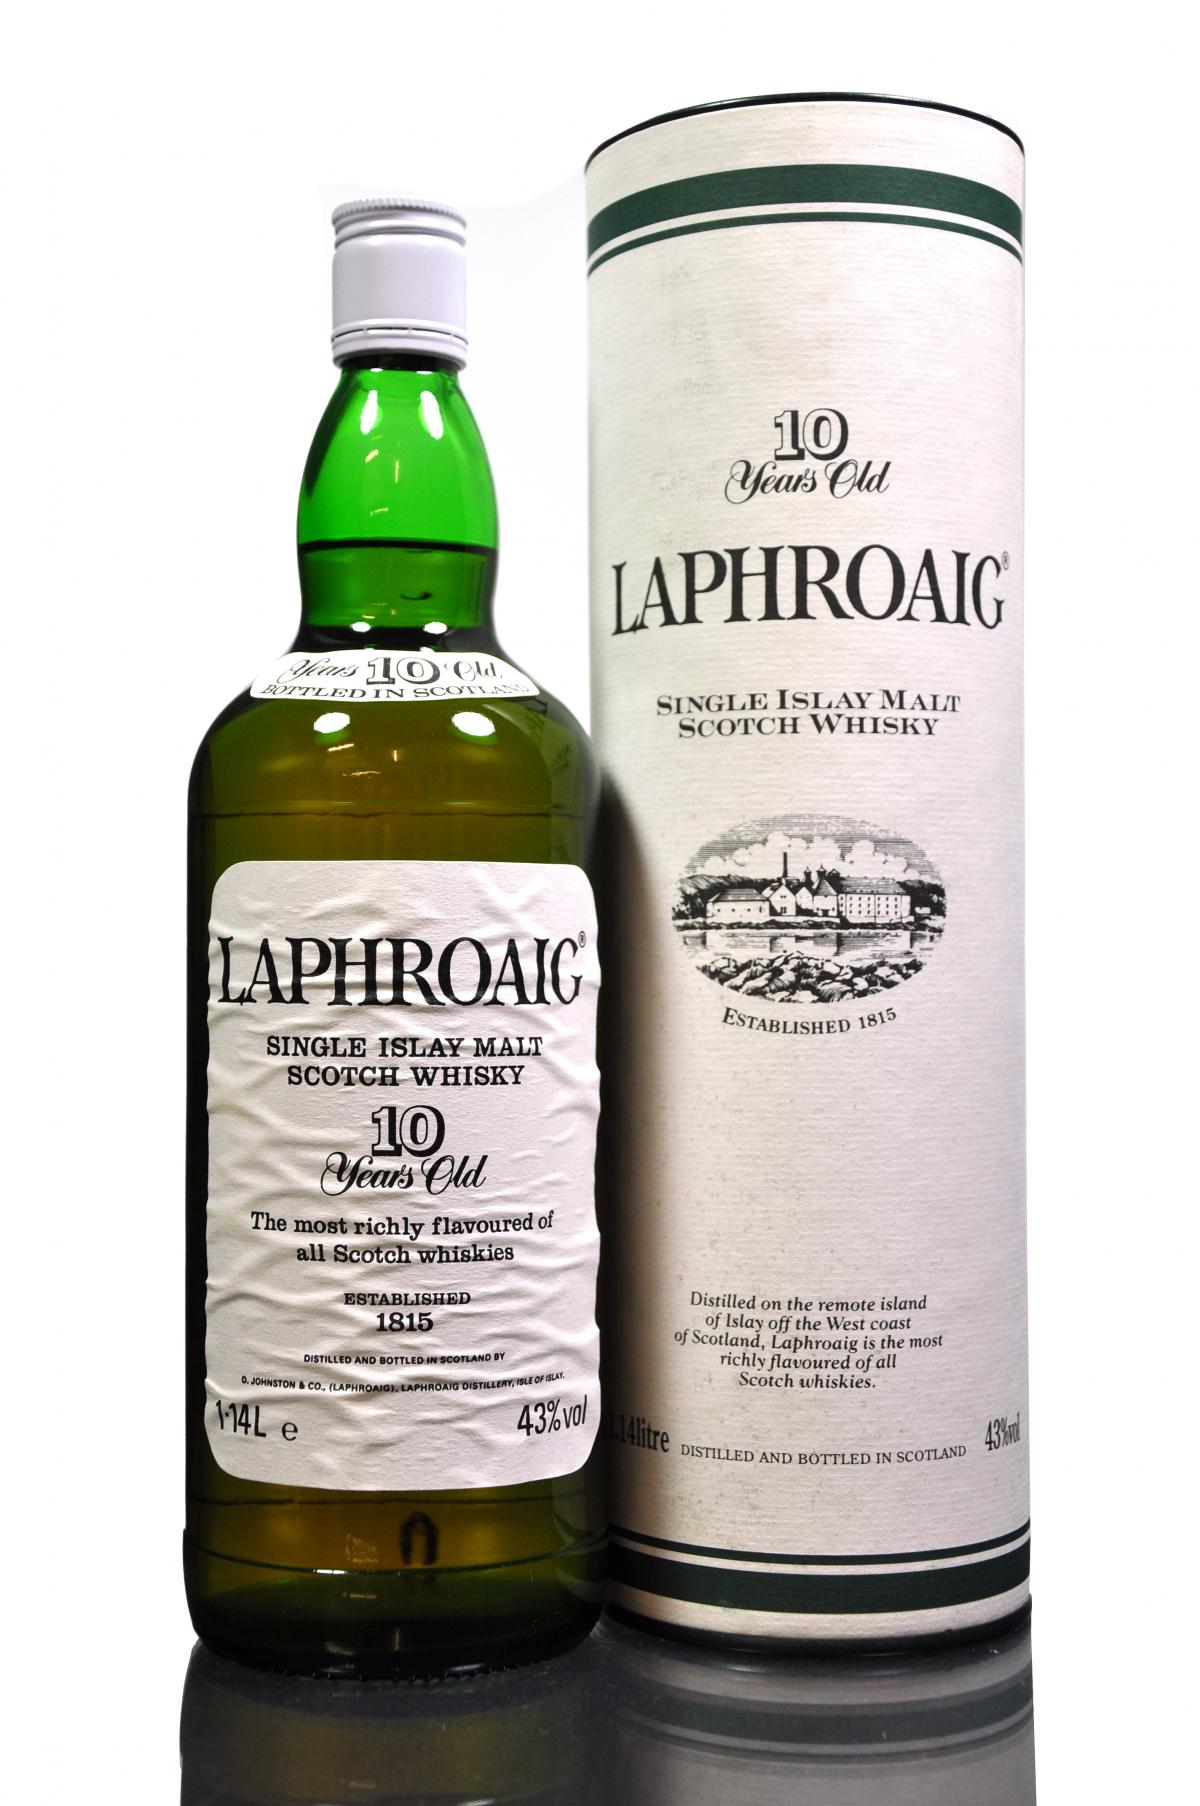 Laphroaig 10 Year Old - Circa 1990 - 1.14 Litre